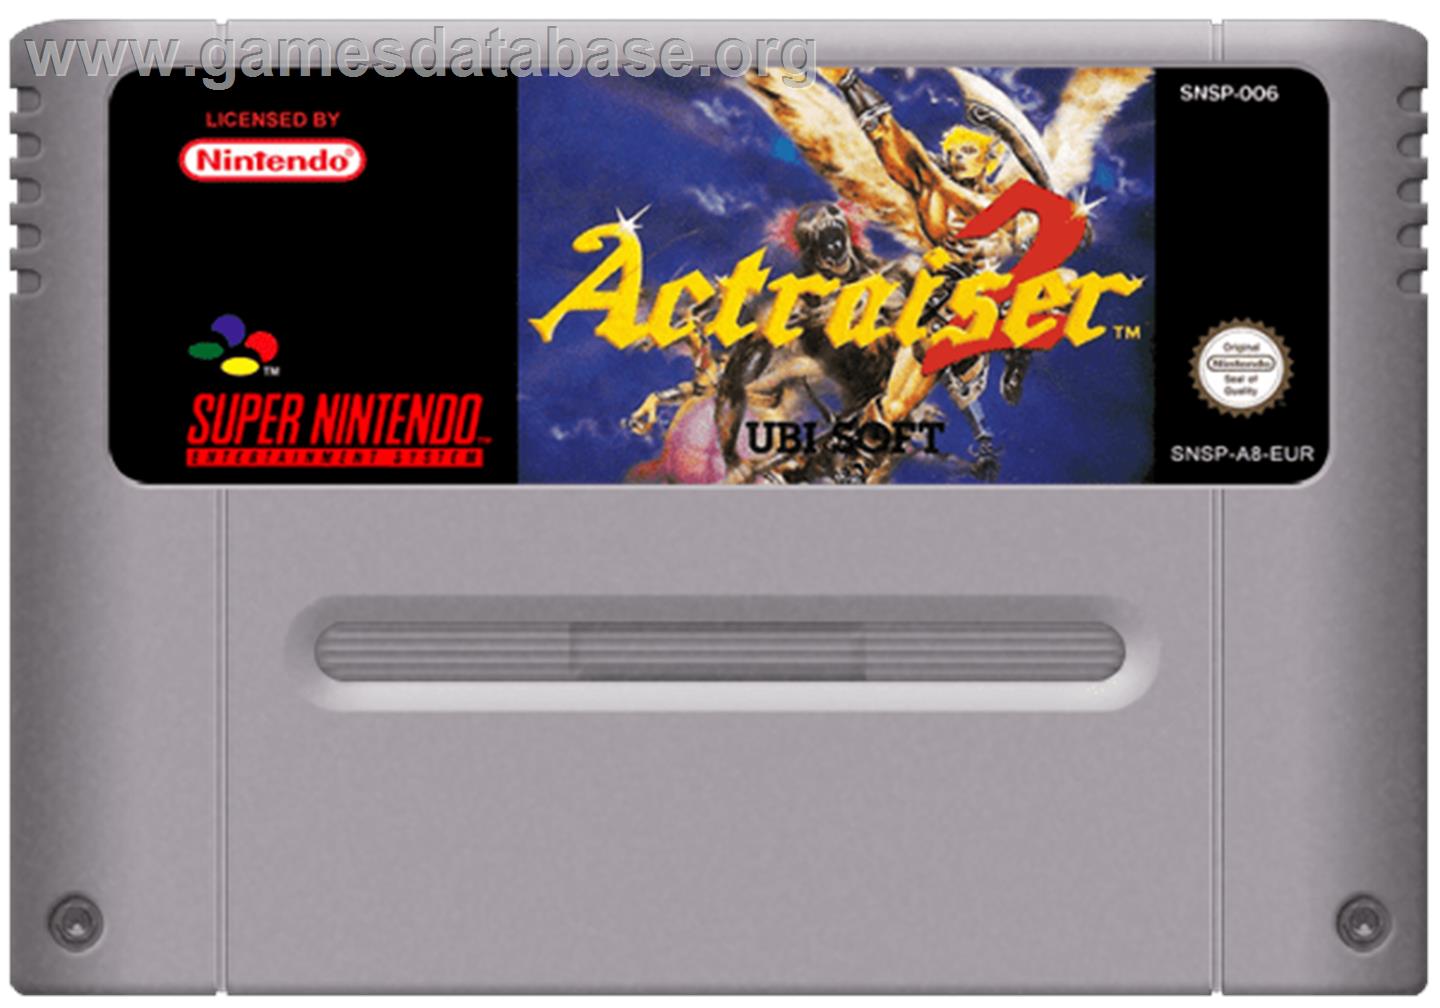 ActRaiser 2 - Nintendo SNES - Artwork - Cartridge